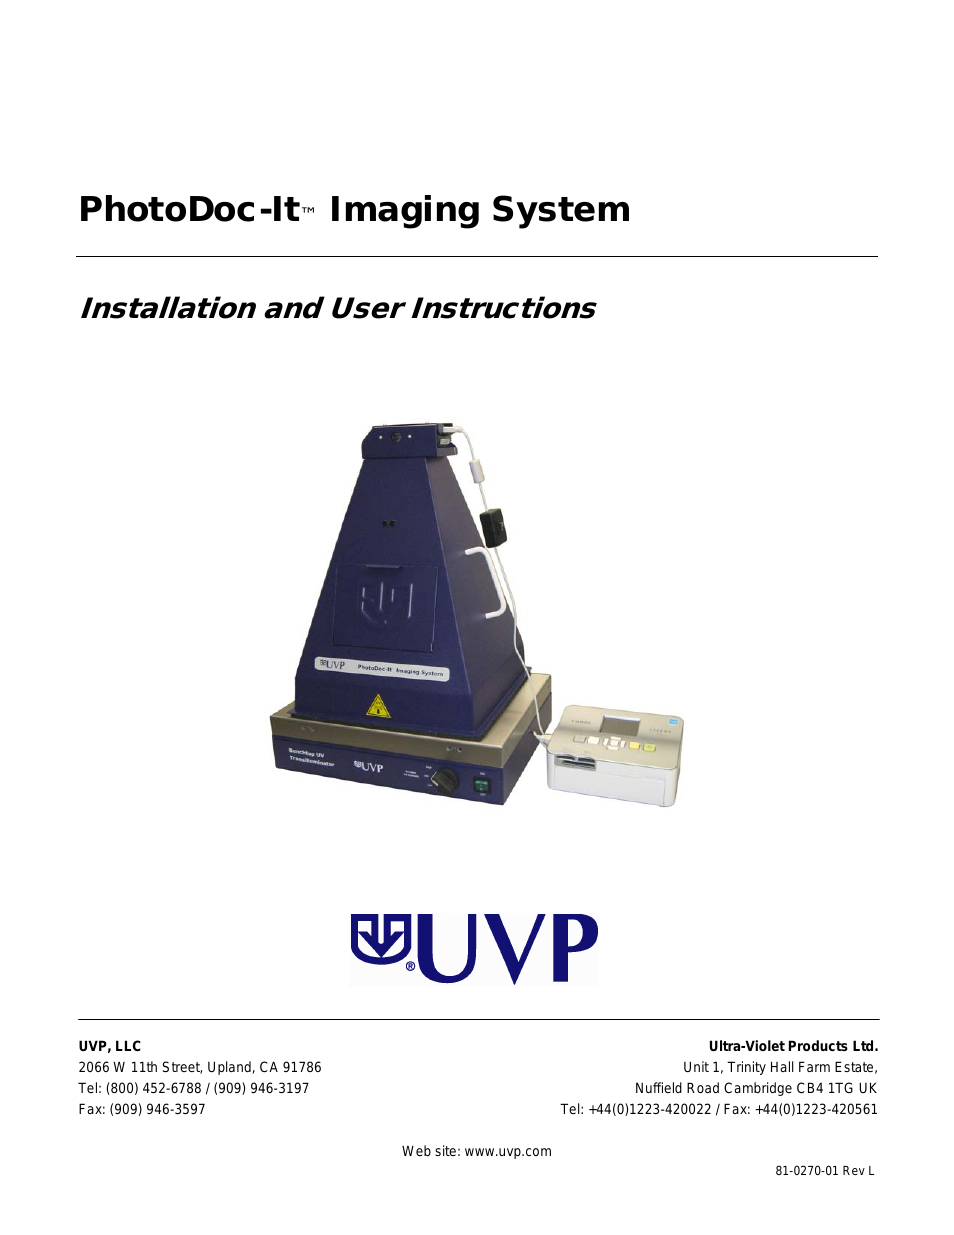 PhotoDoc-It Imaging System